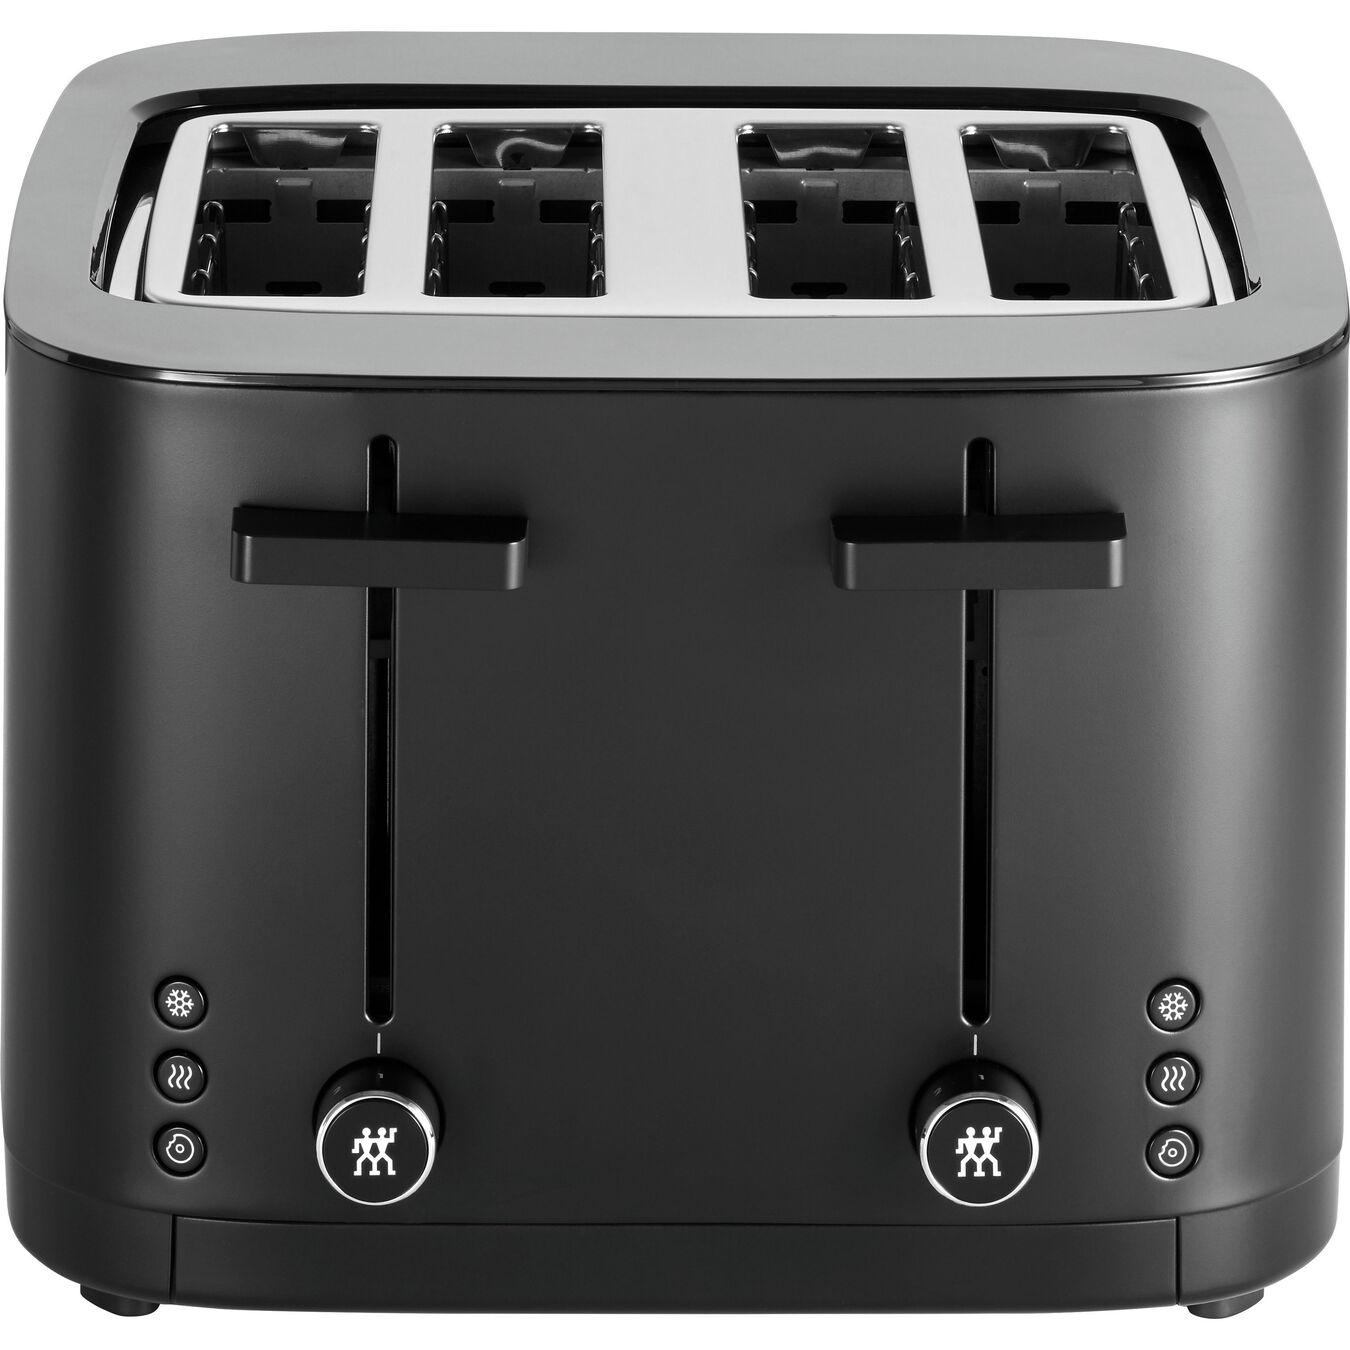 4 Slot Toaster - Black,,large 2